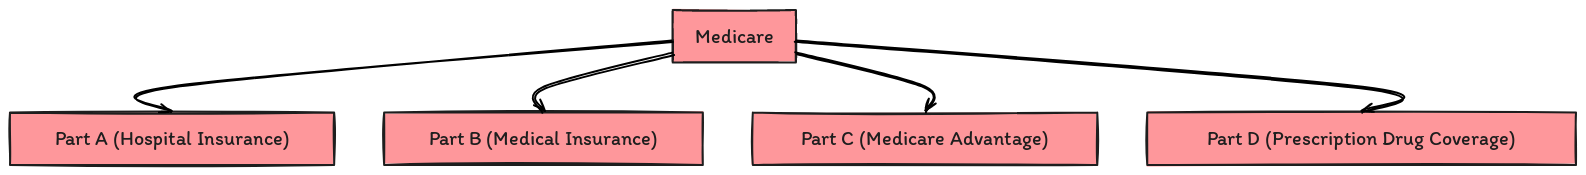 Diagram illustrating the different parts of Medicare: Part A for hospital insurance, Part B for medical insurance, Part C for Medicare Advantage, and Part D for prescription drug coverage.